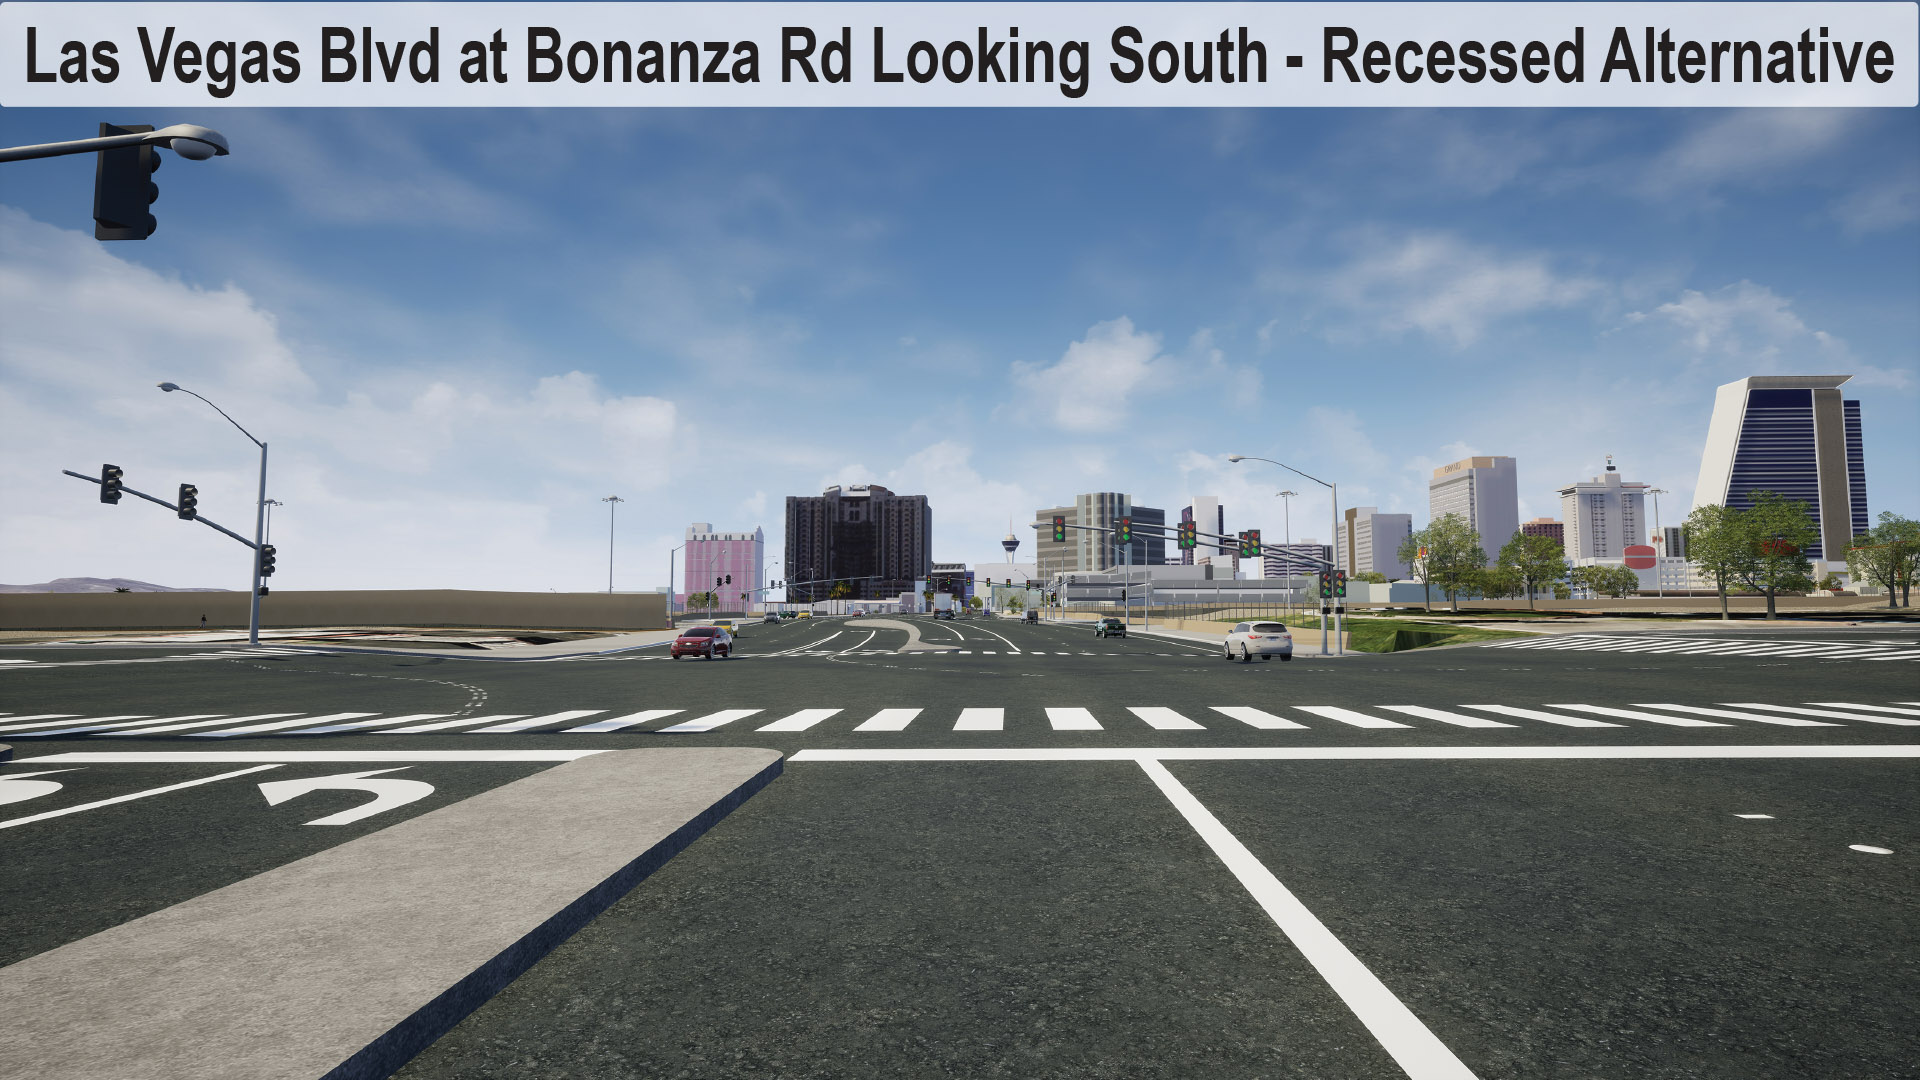 Las Vegas Blvd at Bonanza Rd Looking South - Recessed Alternative